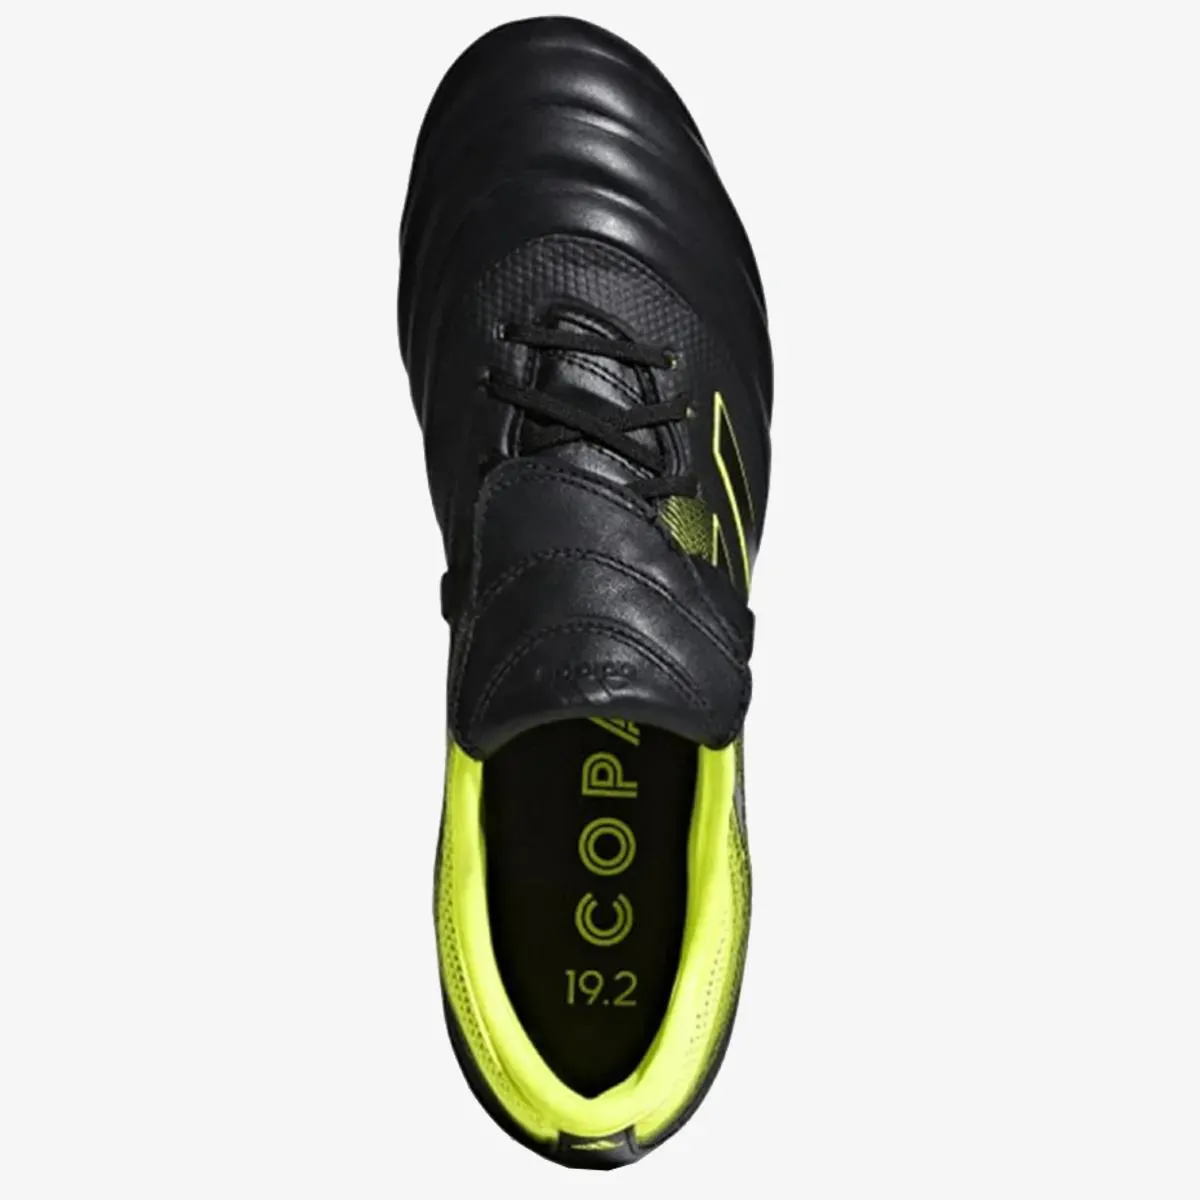 adidas Kopačke adidas kopačke COPA GLORO 19.2 FG 